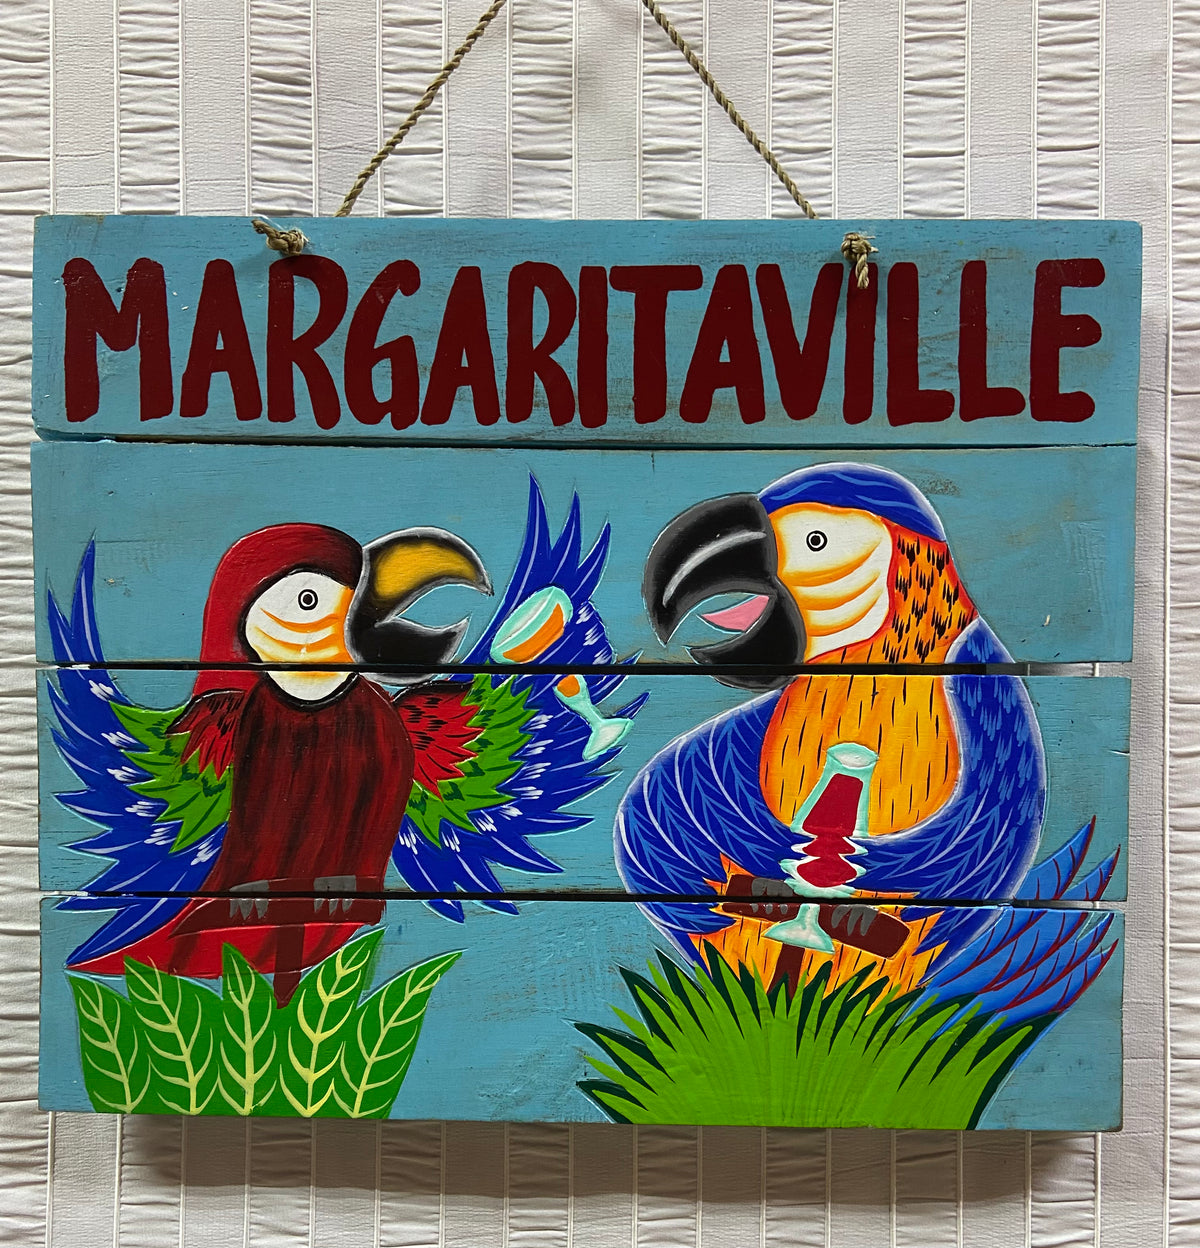 Margaritaville Sign from Bali